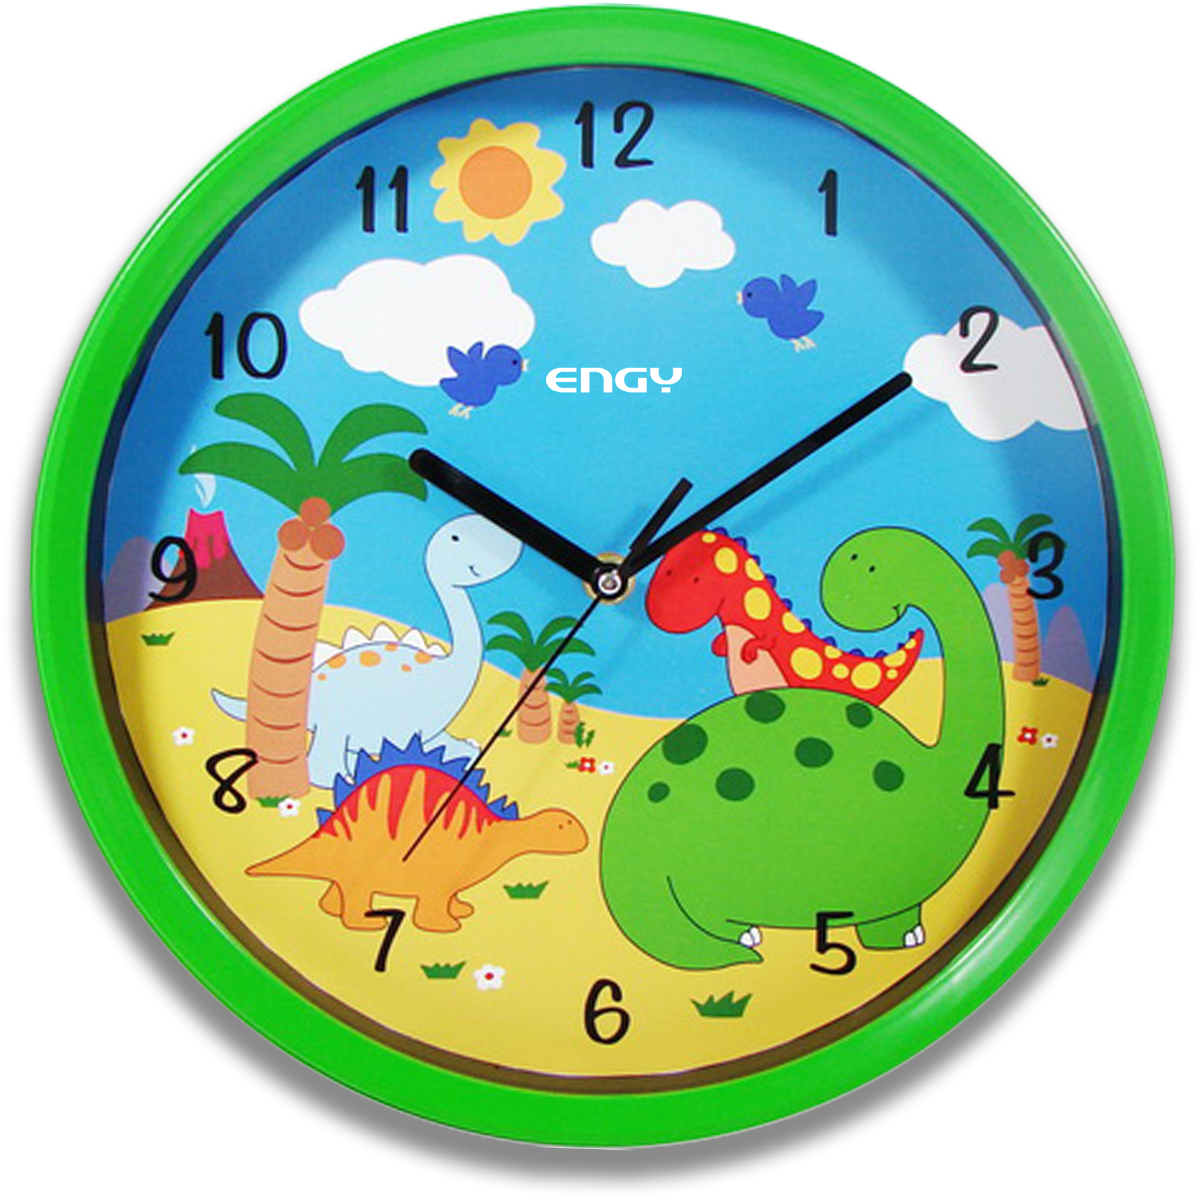 Картинку про часы. Часы настенные кварцевые Engy. Часы настенные кварцевые Engy модель ЕС-17 круглые. Круглые часы для детей. Часы настенные для детей.